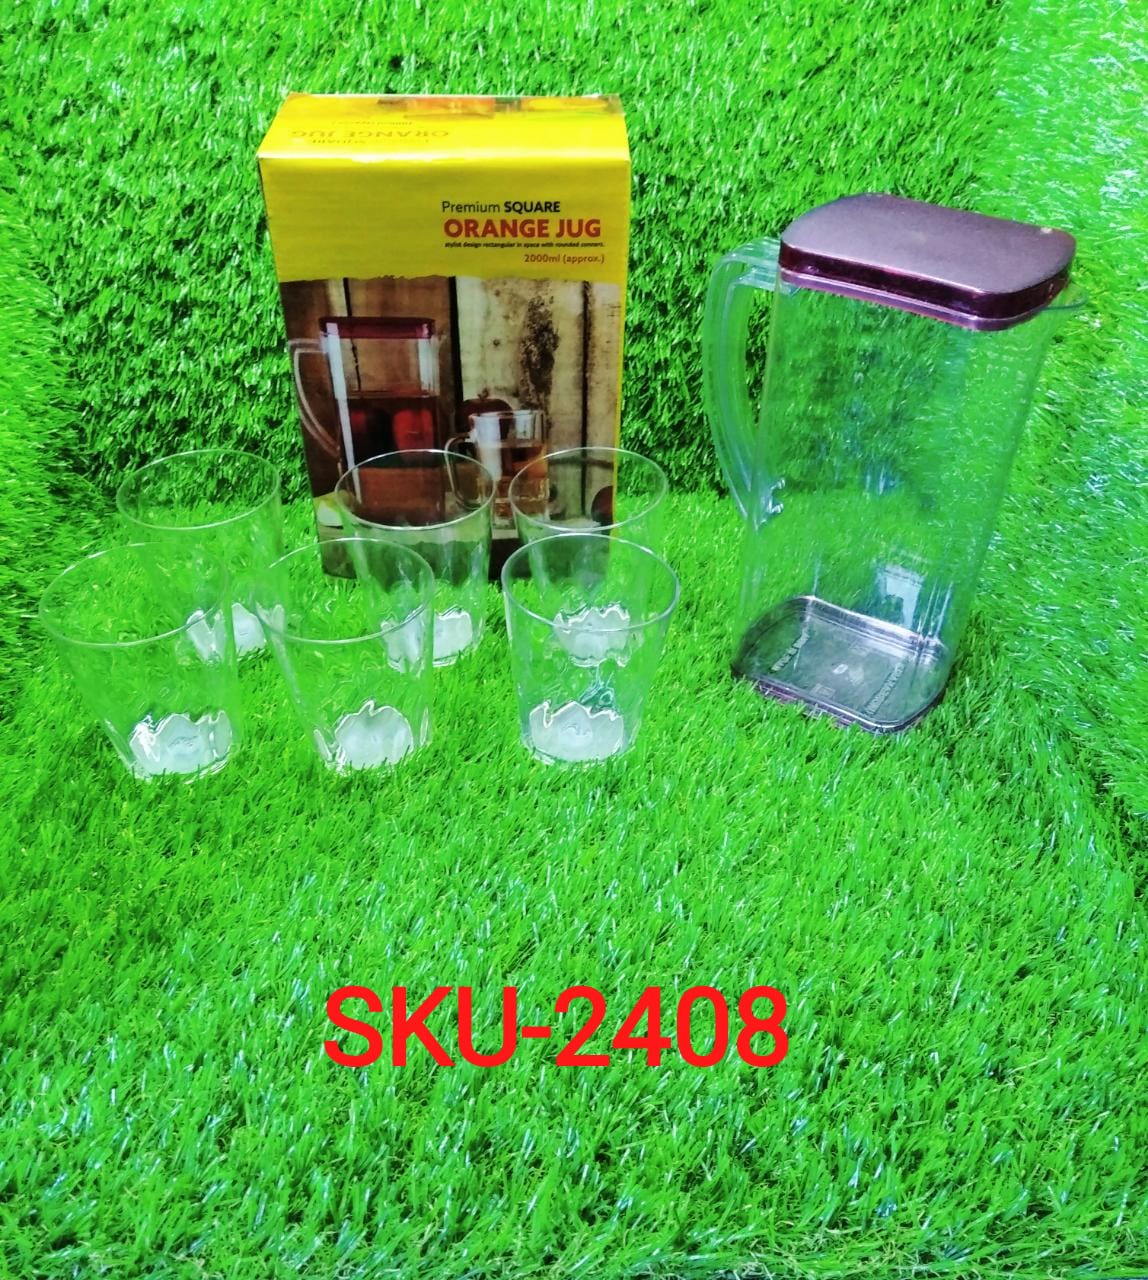 2408A Resistant Glass Jug for Juice, Milk, Cold or Hot Beverages DeoDap